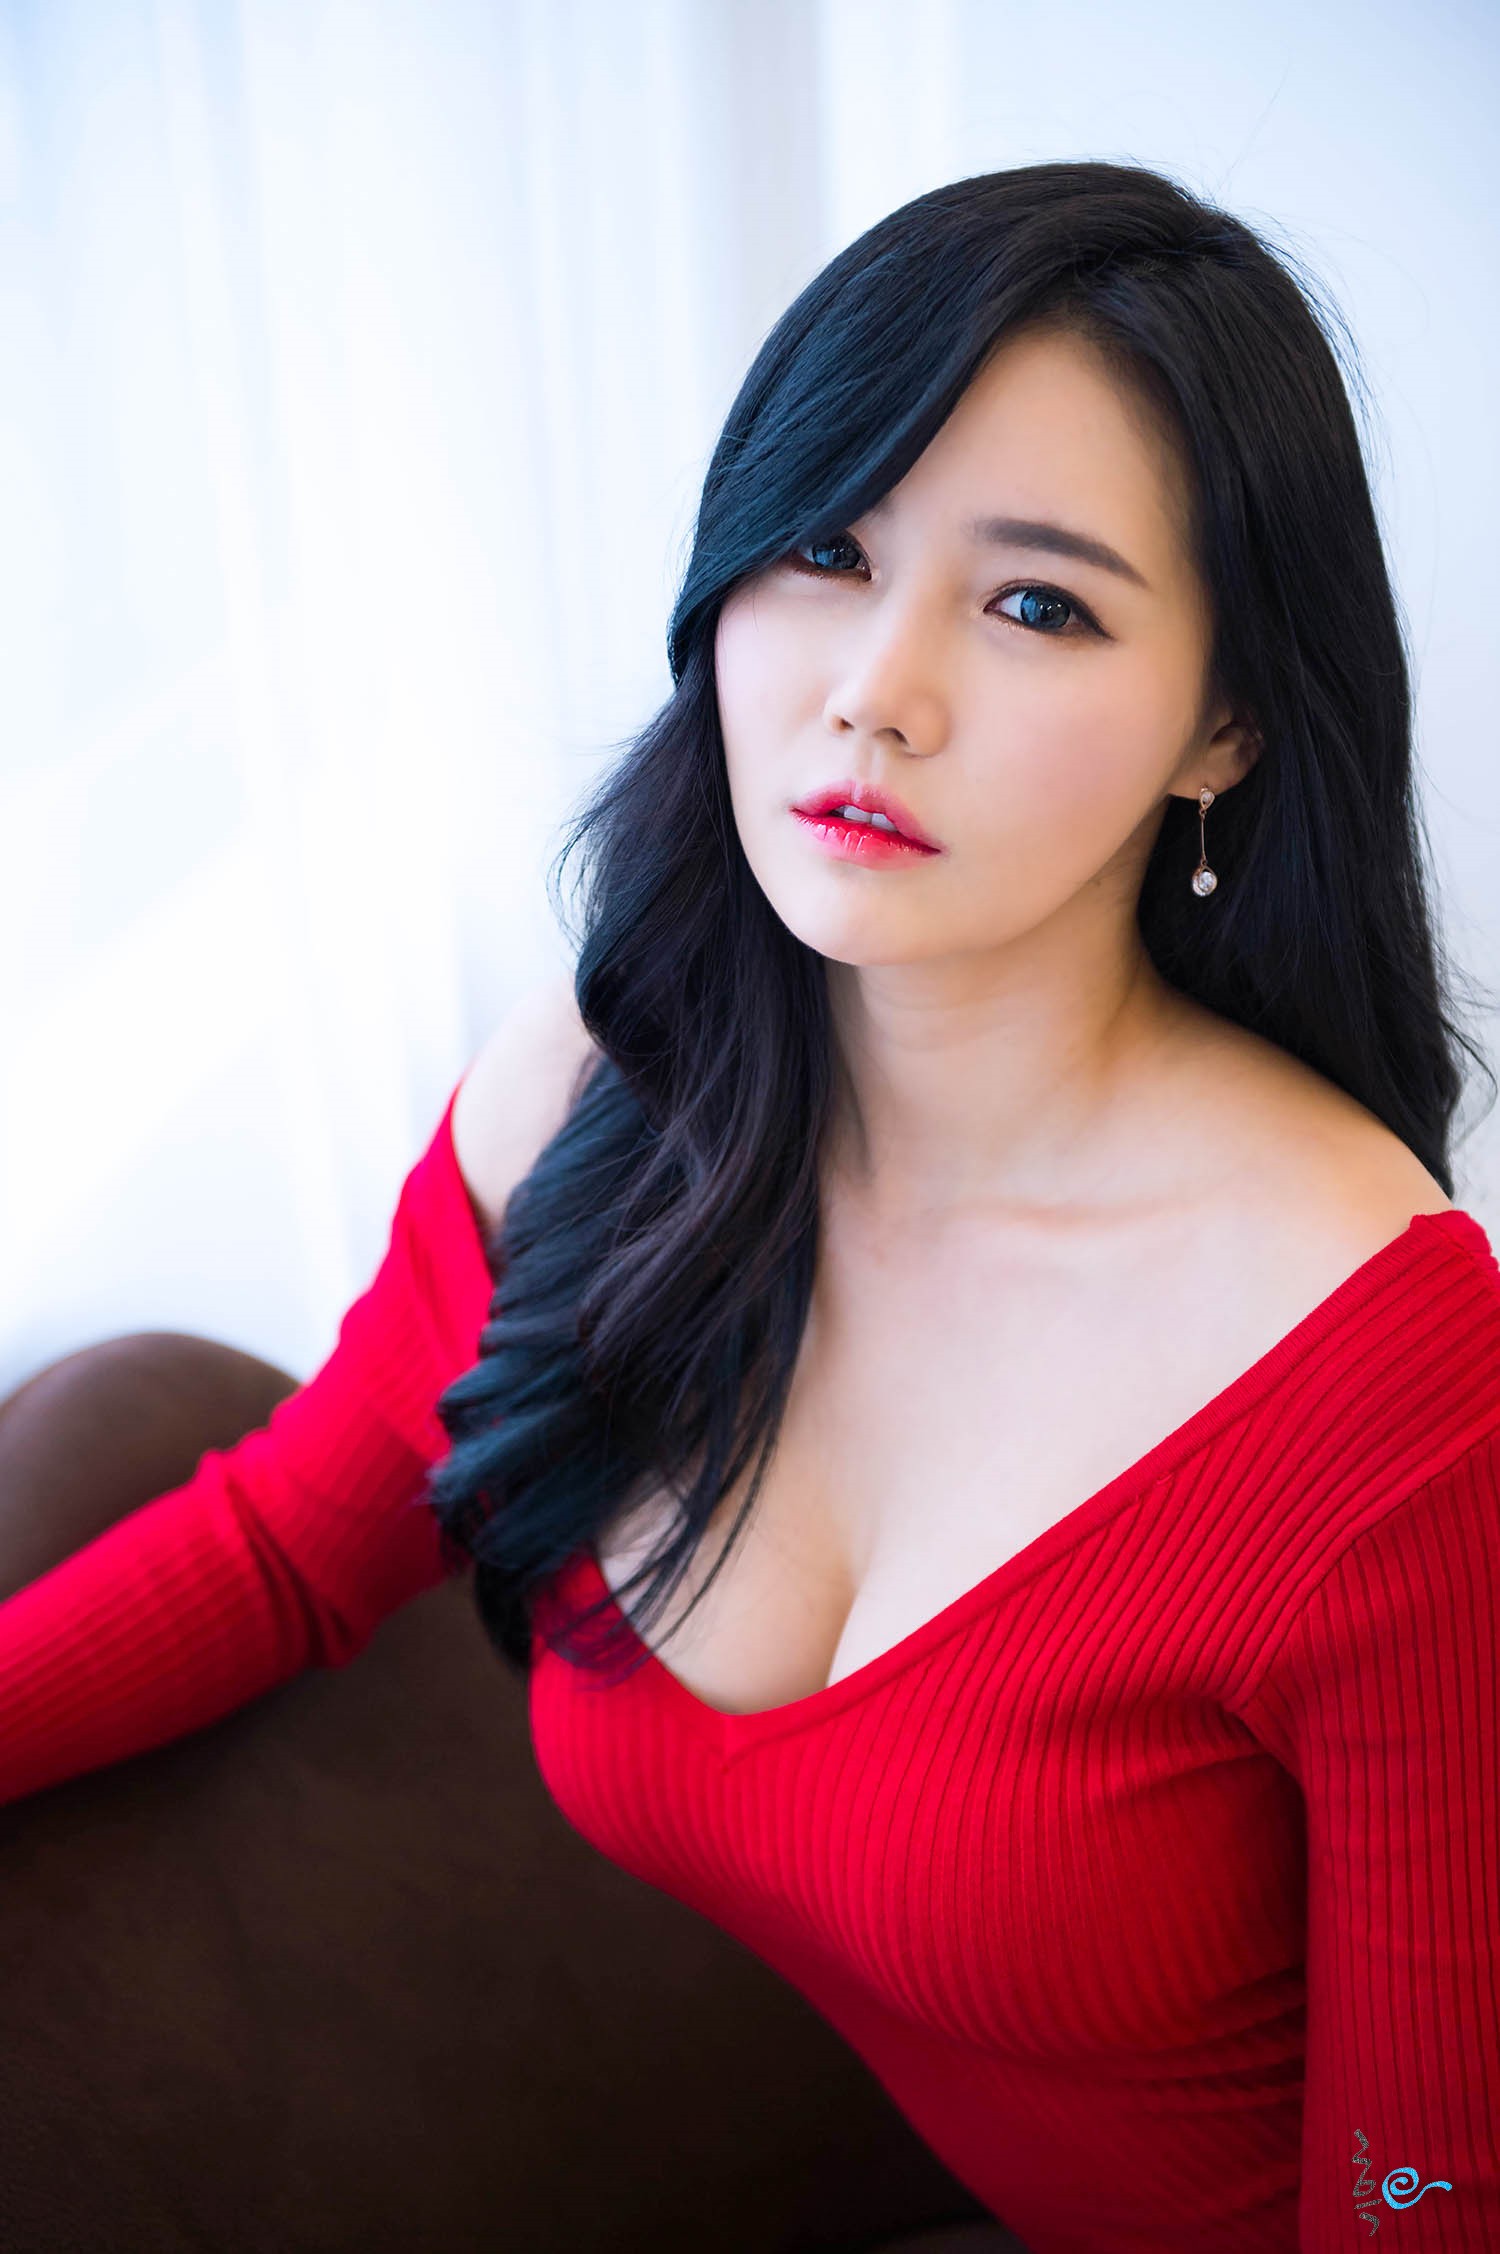 Han Ga Eun Red Dress V Neck Hair Over One Eye Bare Shoulders Red Tops Dark Hair Wavy Hair Asian Wome 1500x2254